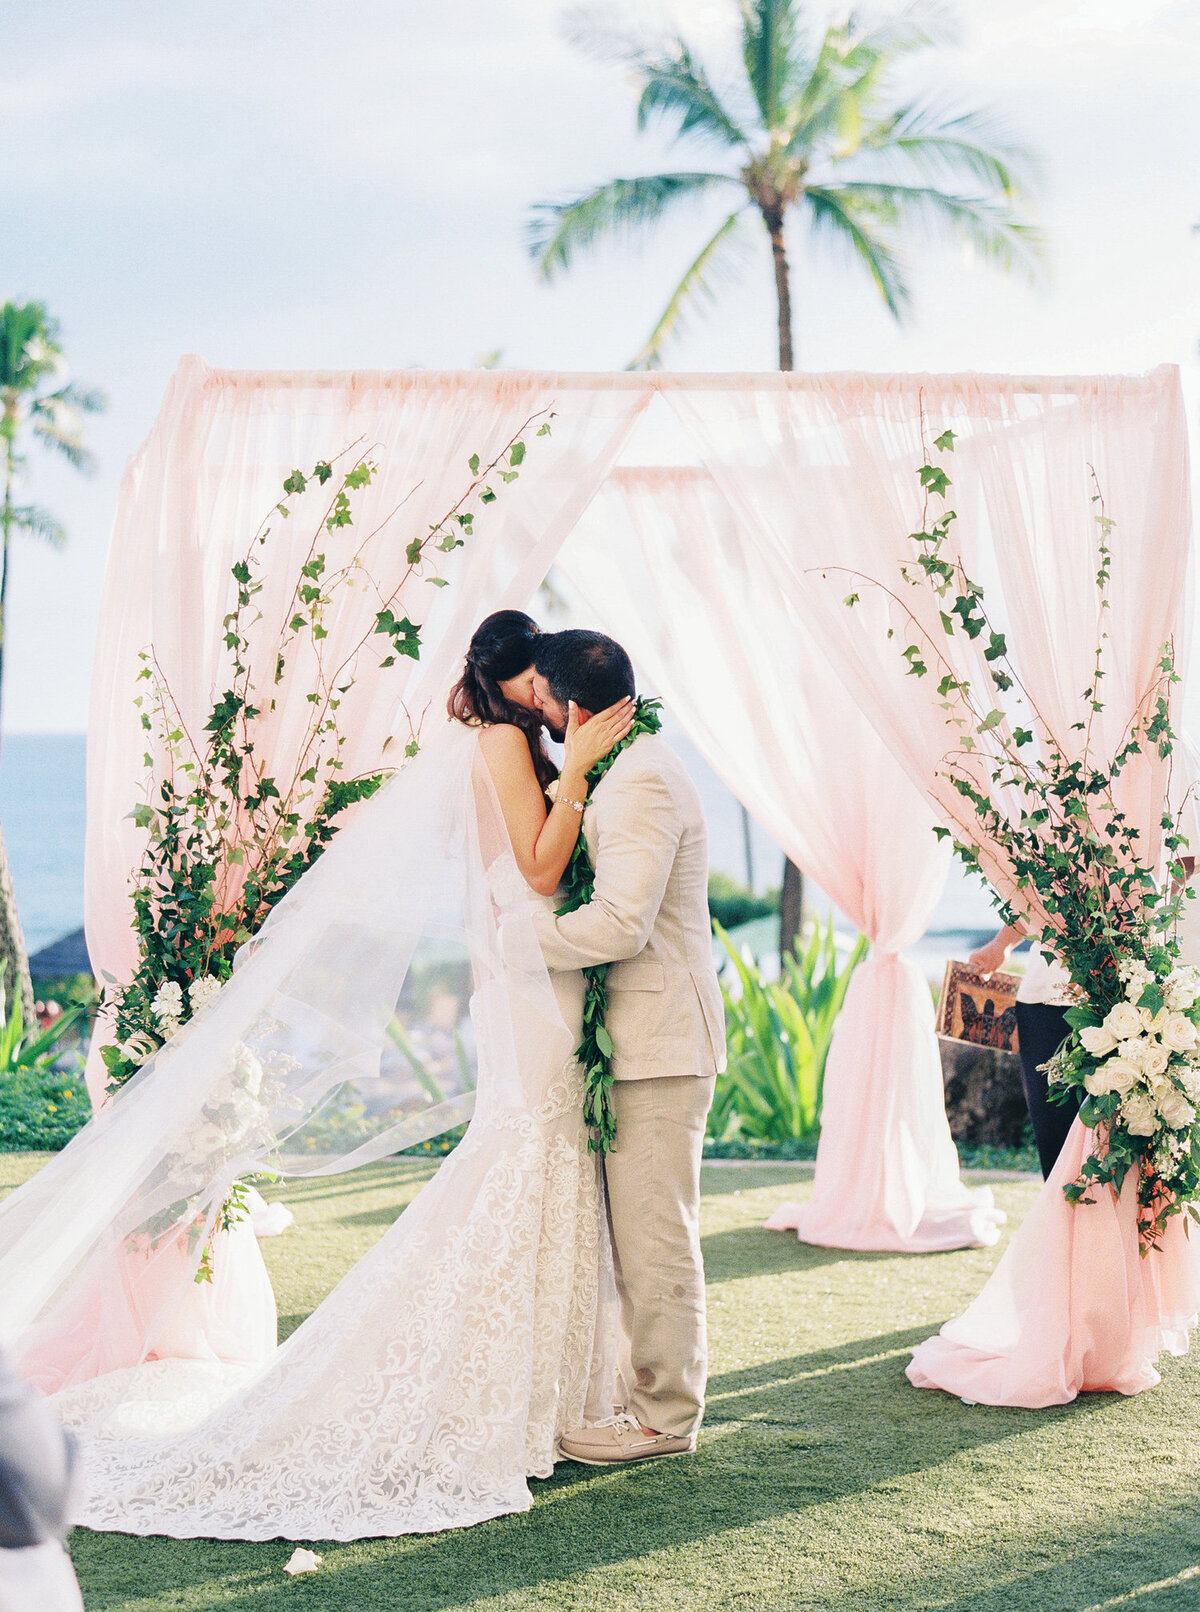 Lynda + Rebwar | Hawaii Wedding & Lifestyle Photography | Ashley Goodwin Photography